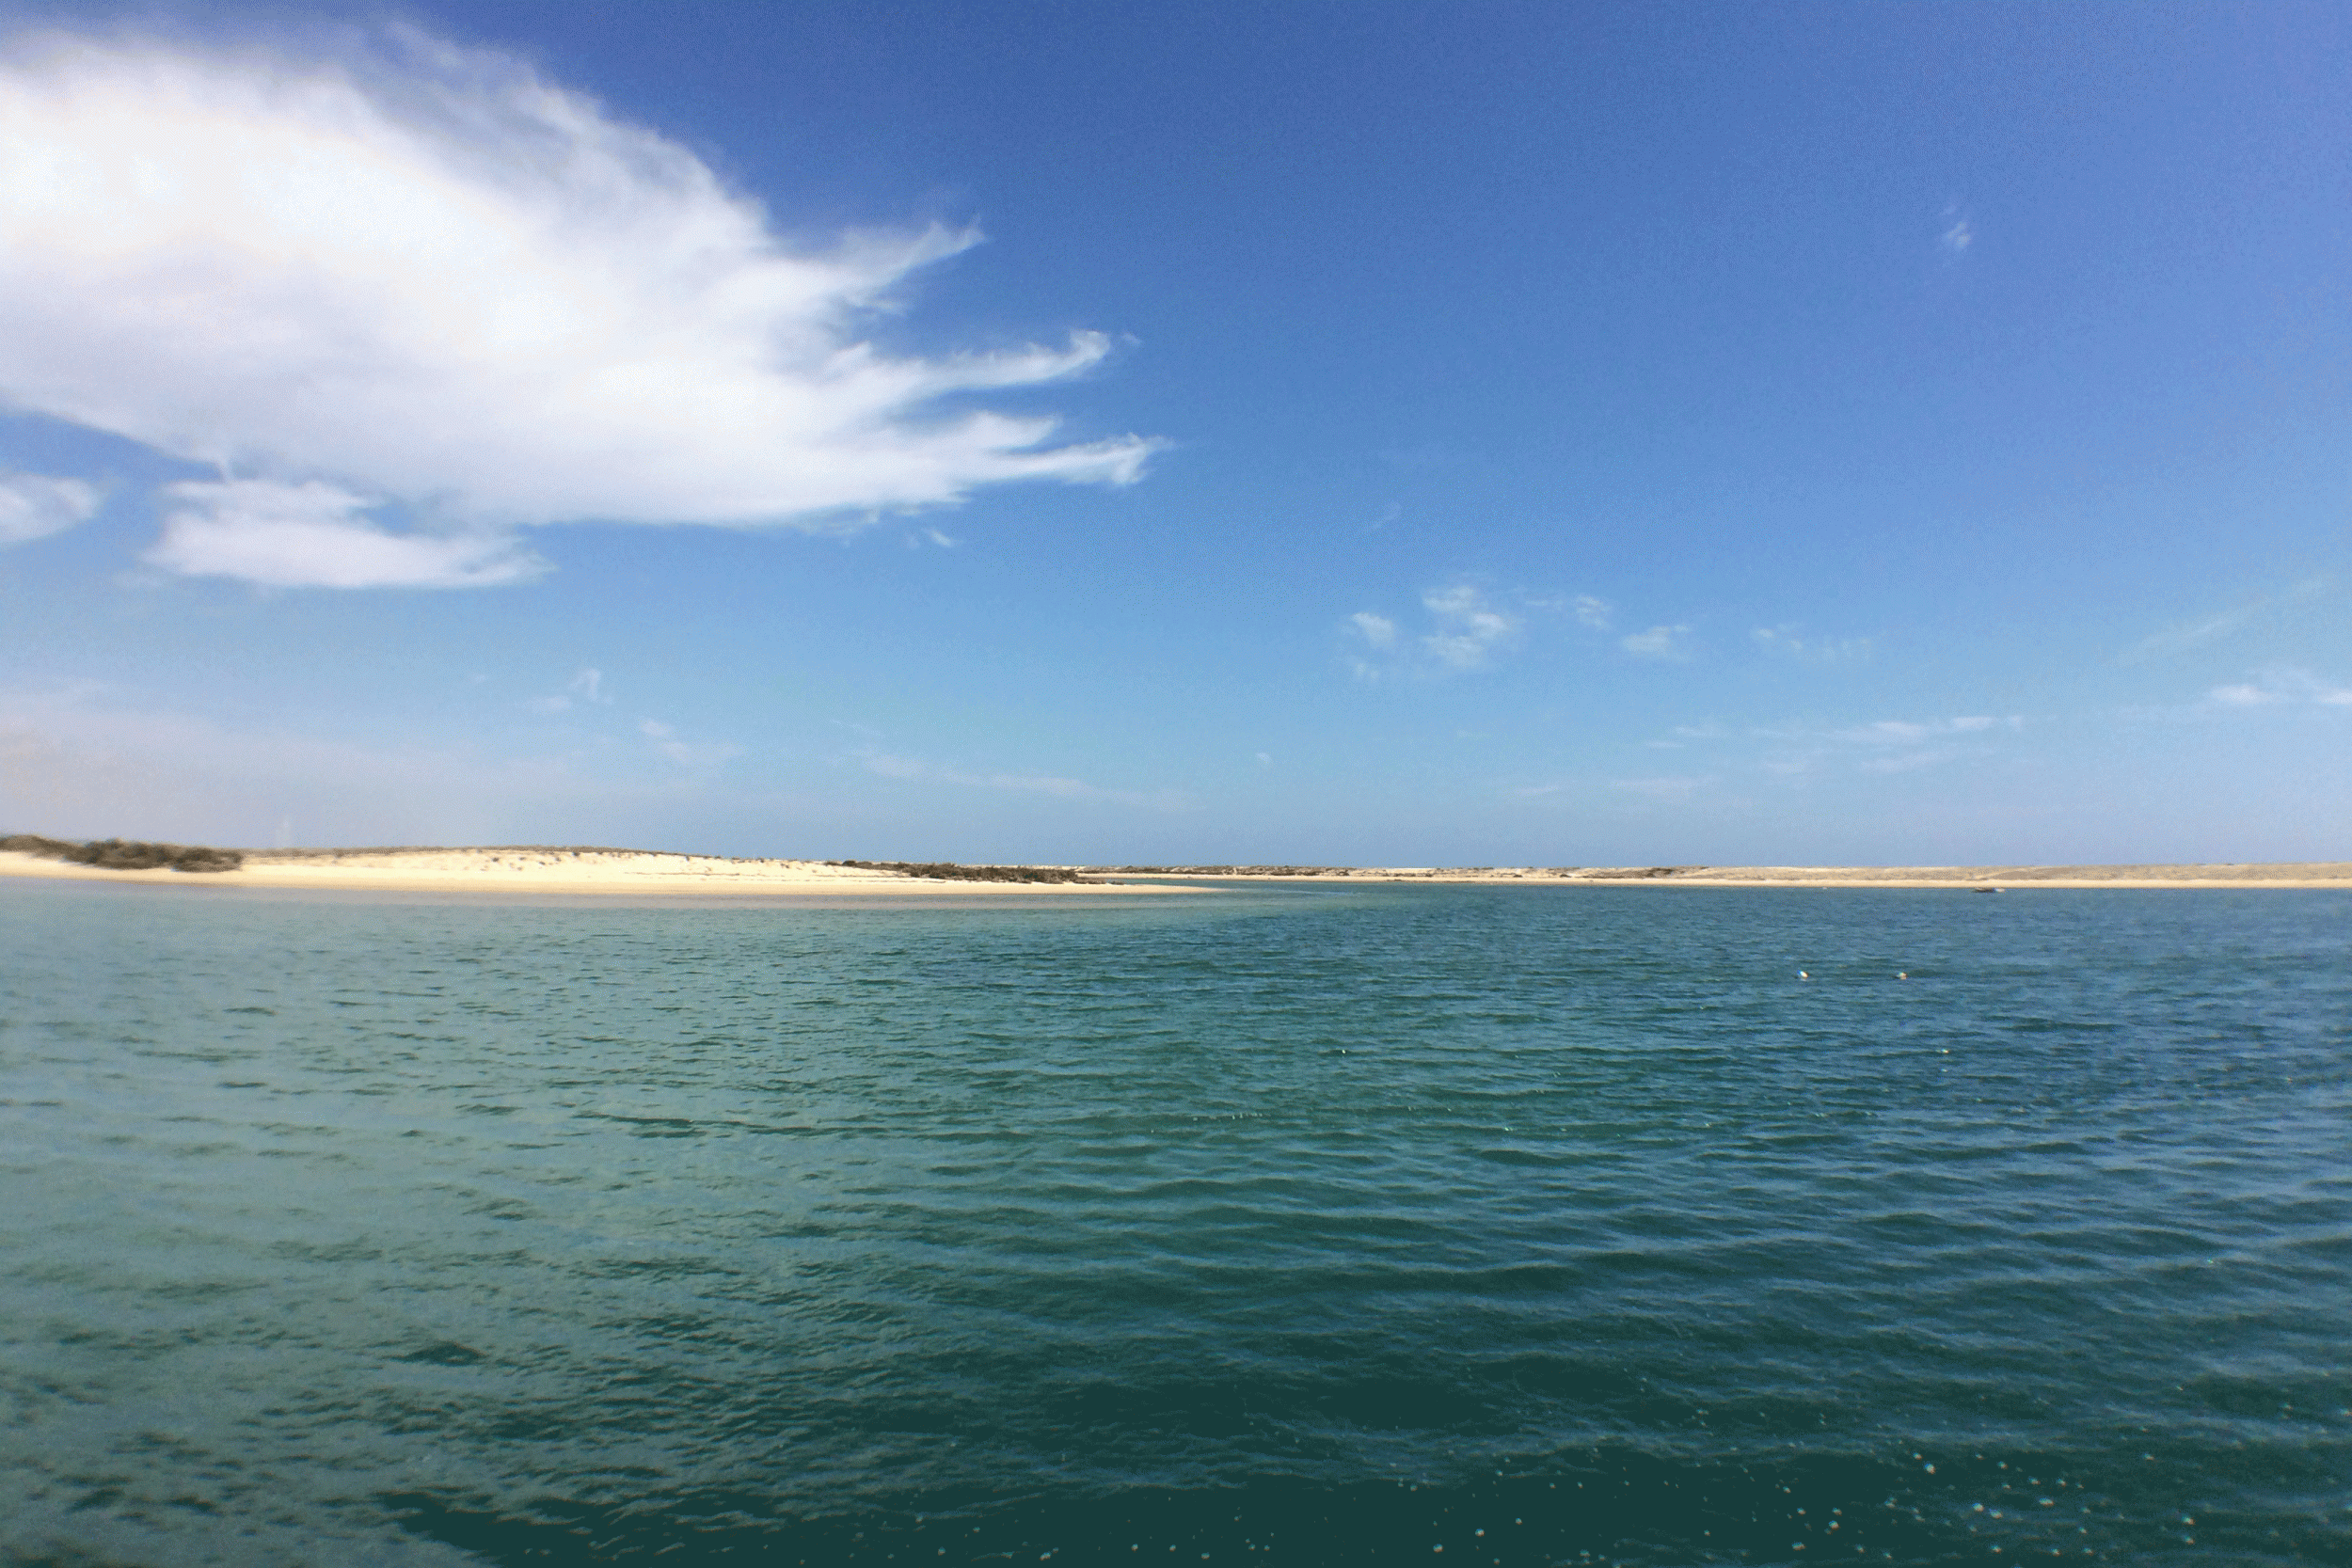 A boat trip across the Ria Formosa lagoon to Fuzeta beach